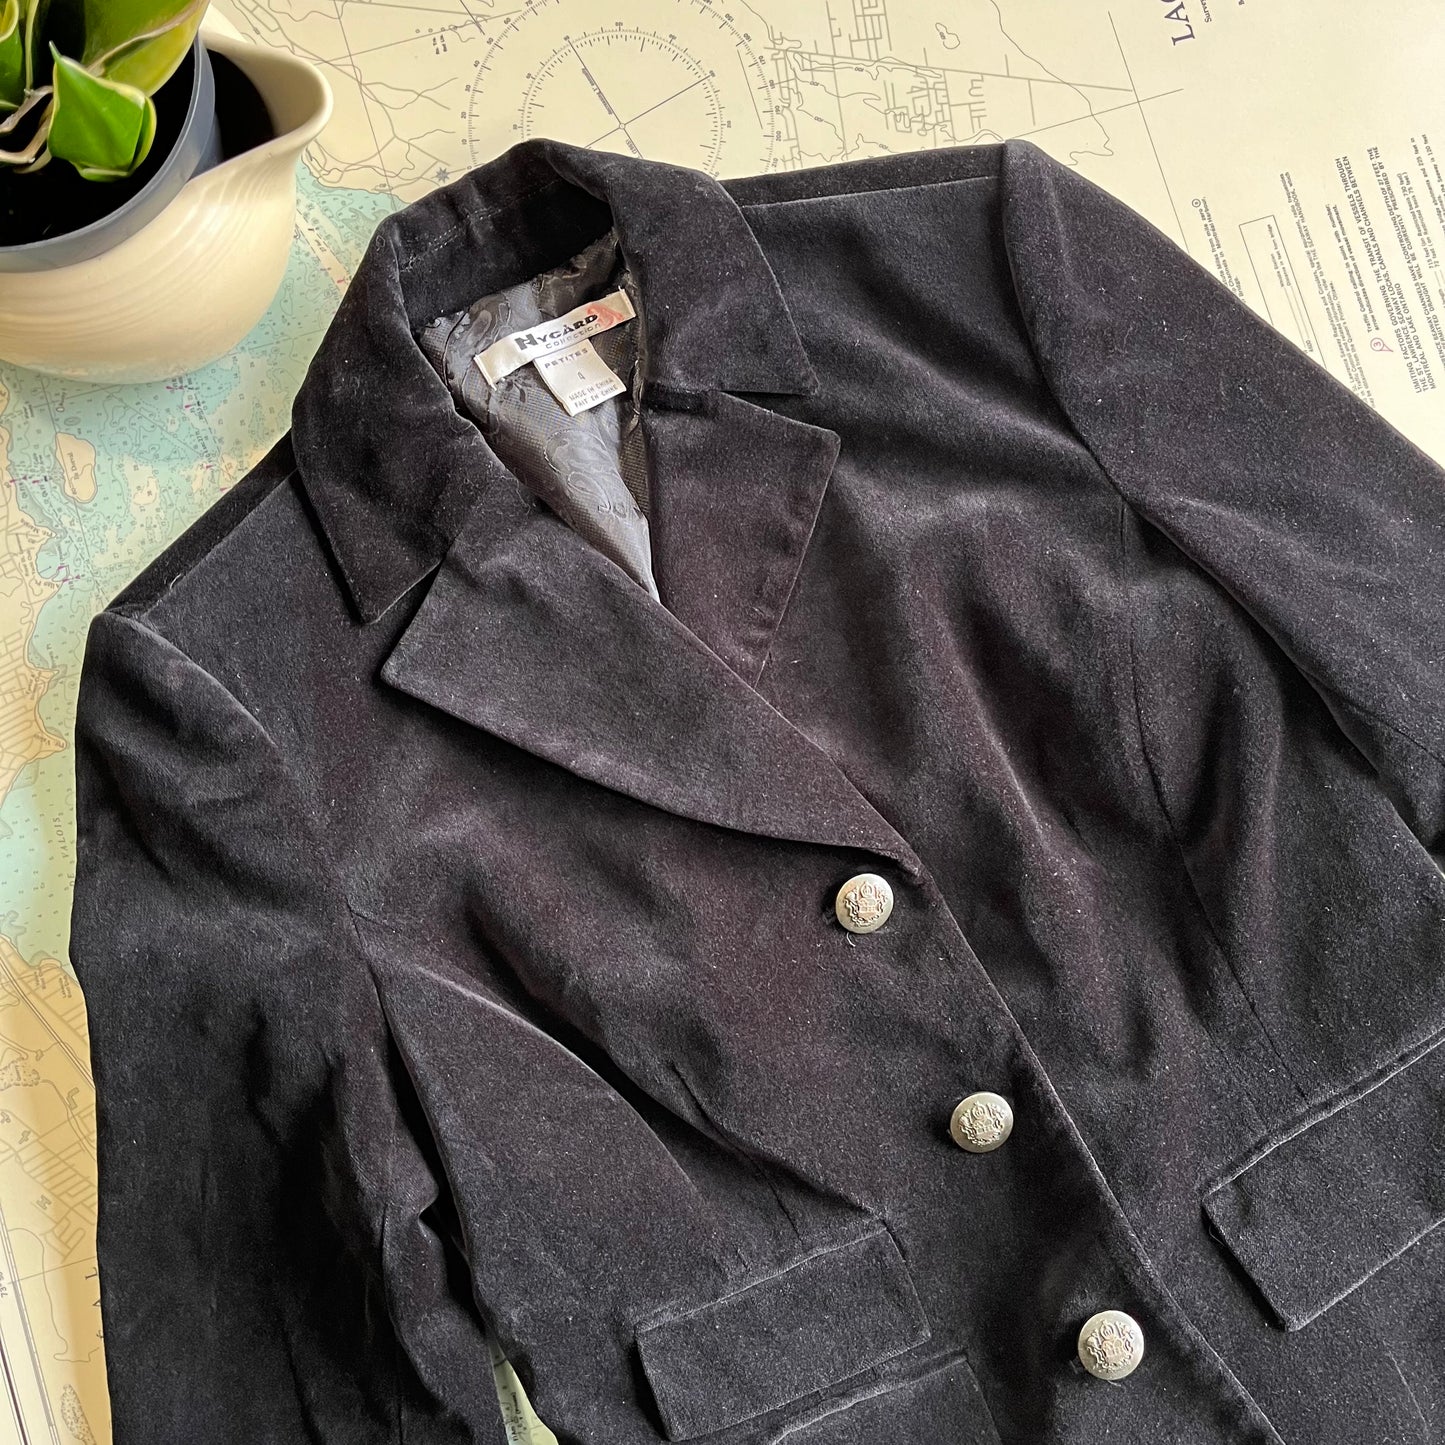 Vintage Black Velvet Blazer / Jacket